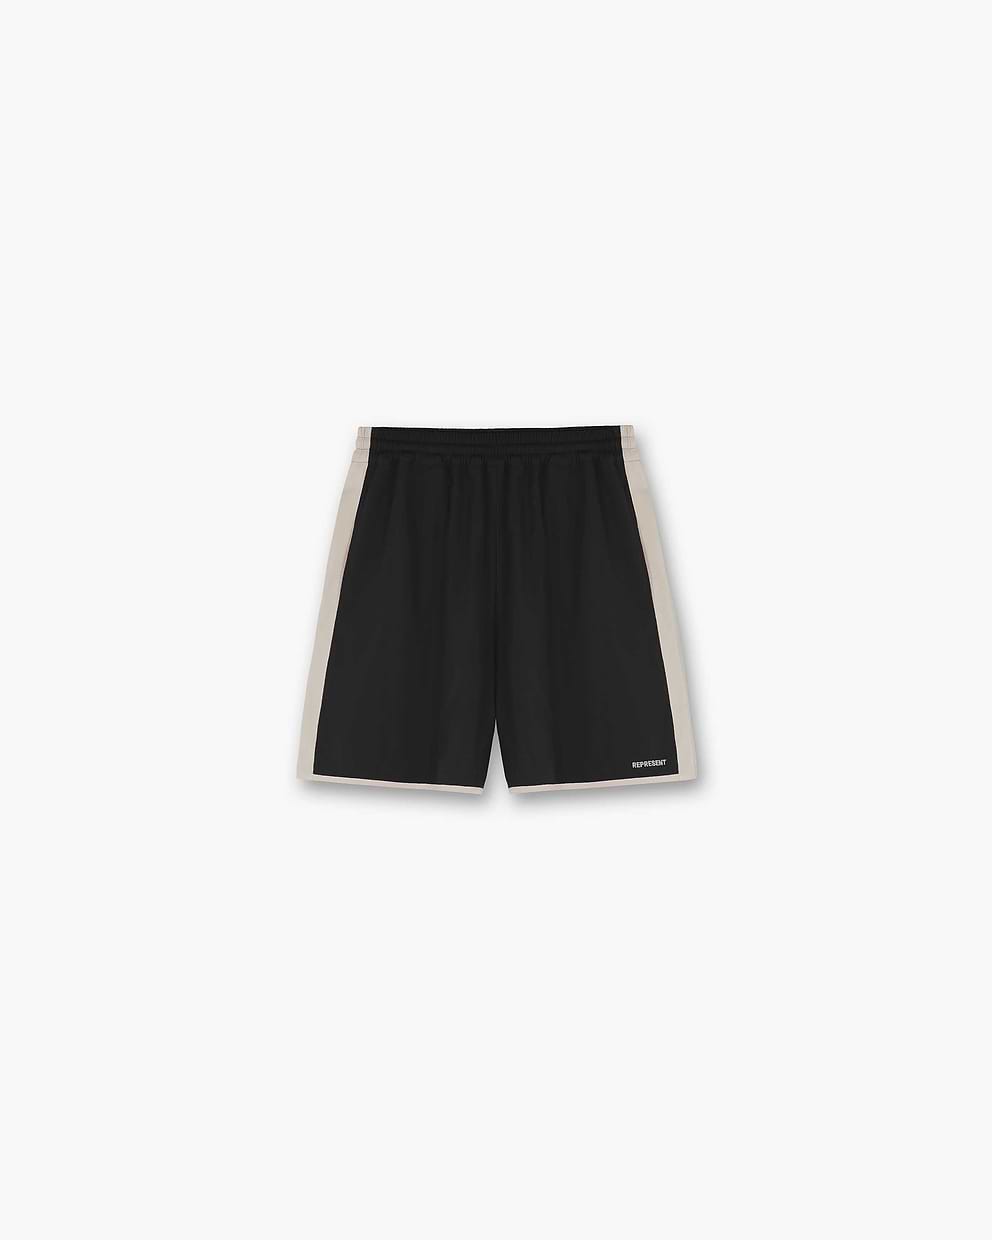 Souvenir Shorts - Black